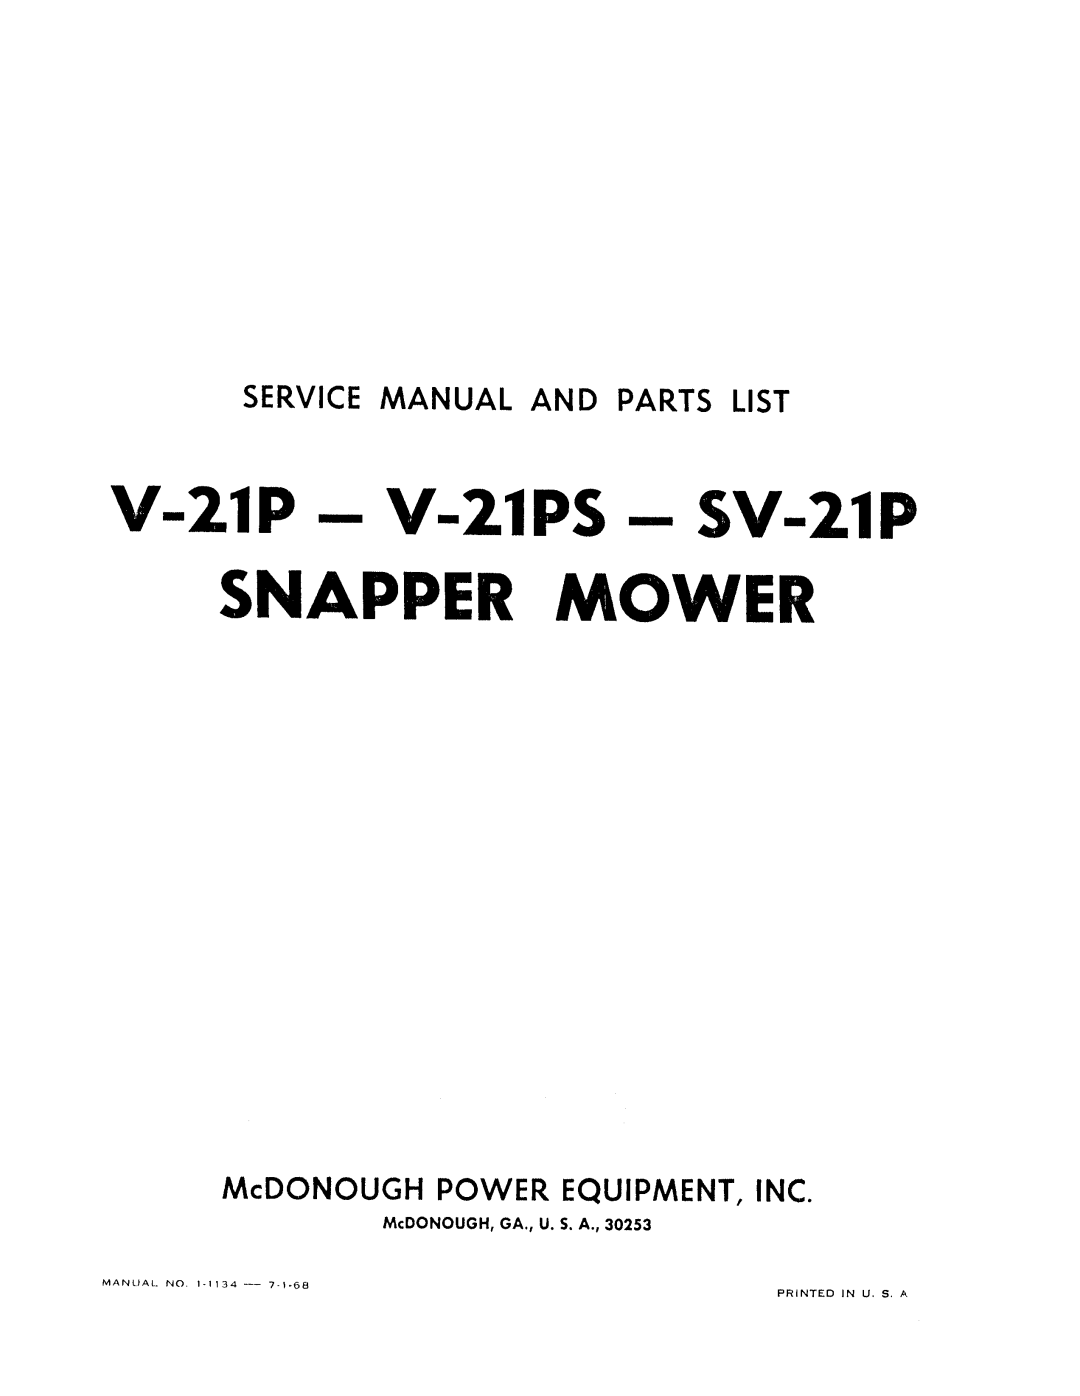 Snapper V-21PS, SV-21P manual 